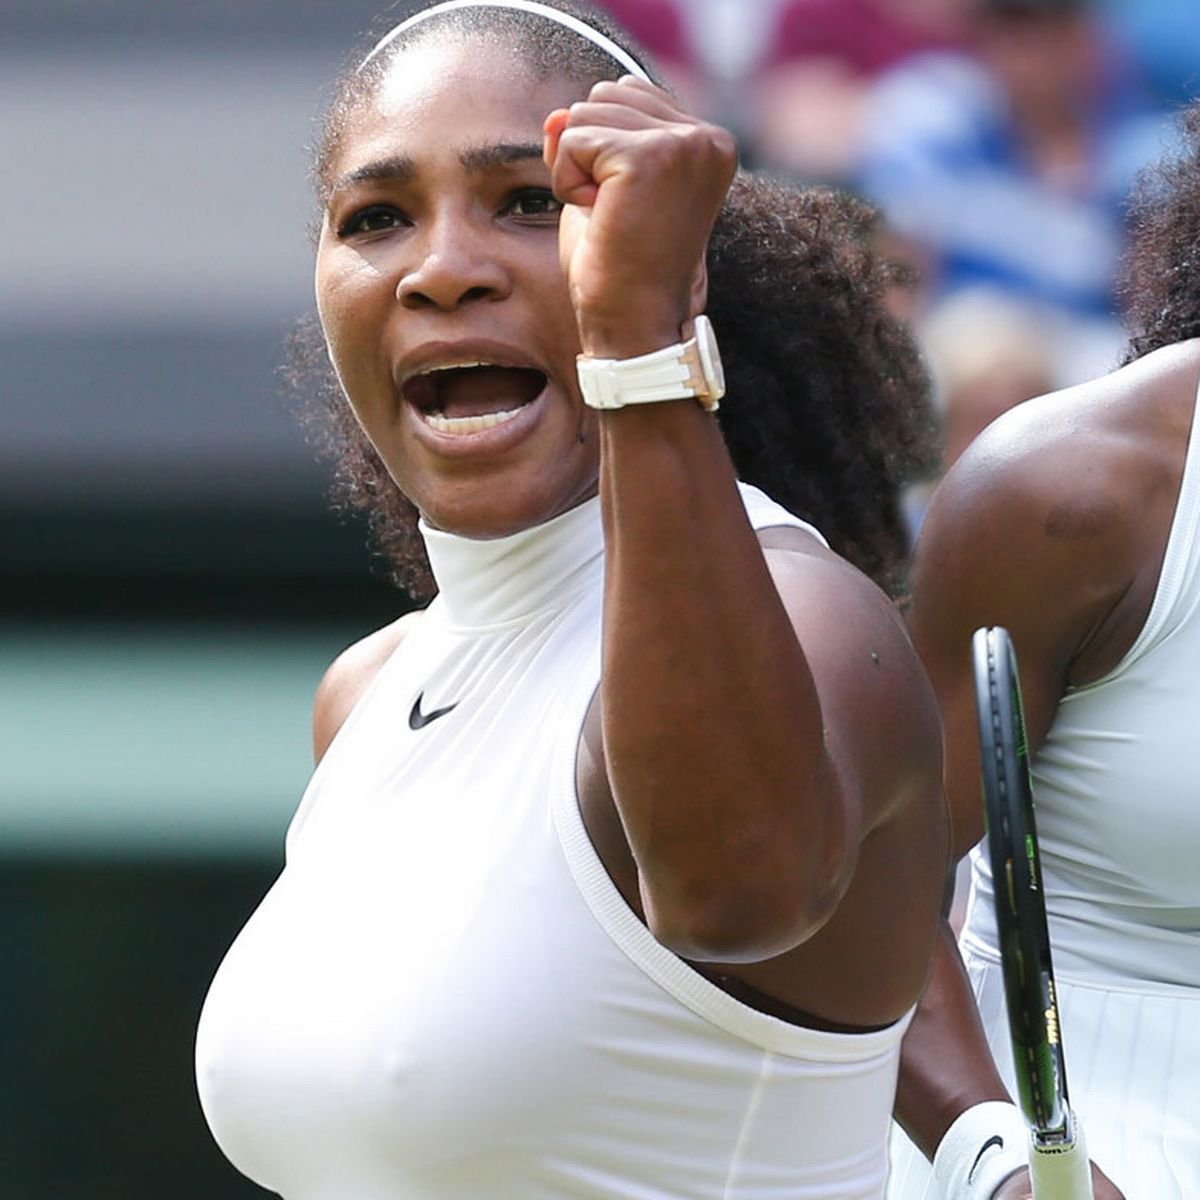 Serena Williams in Wimbledon no bra dress code